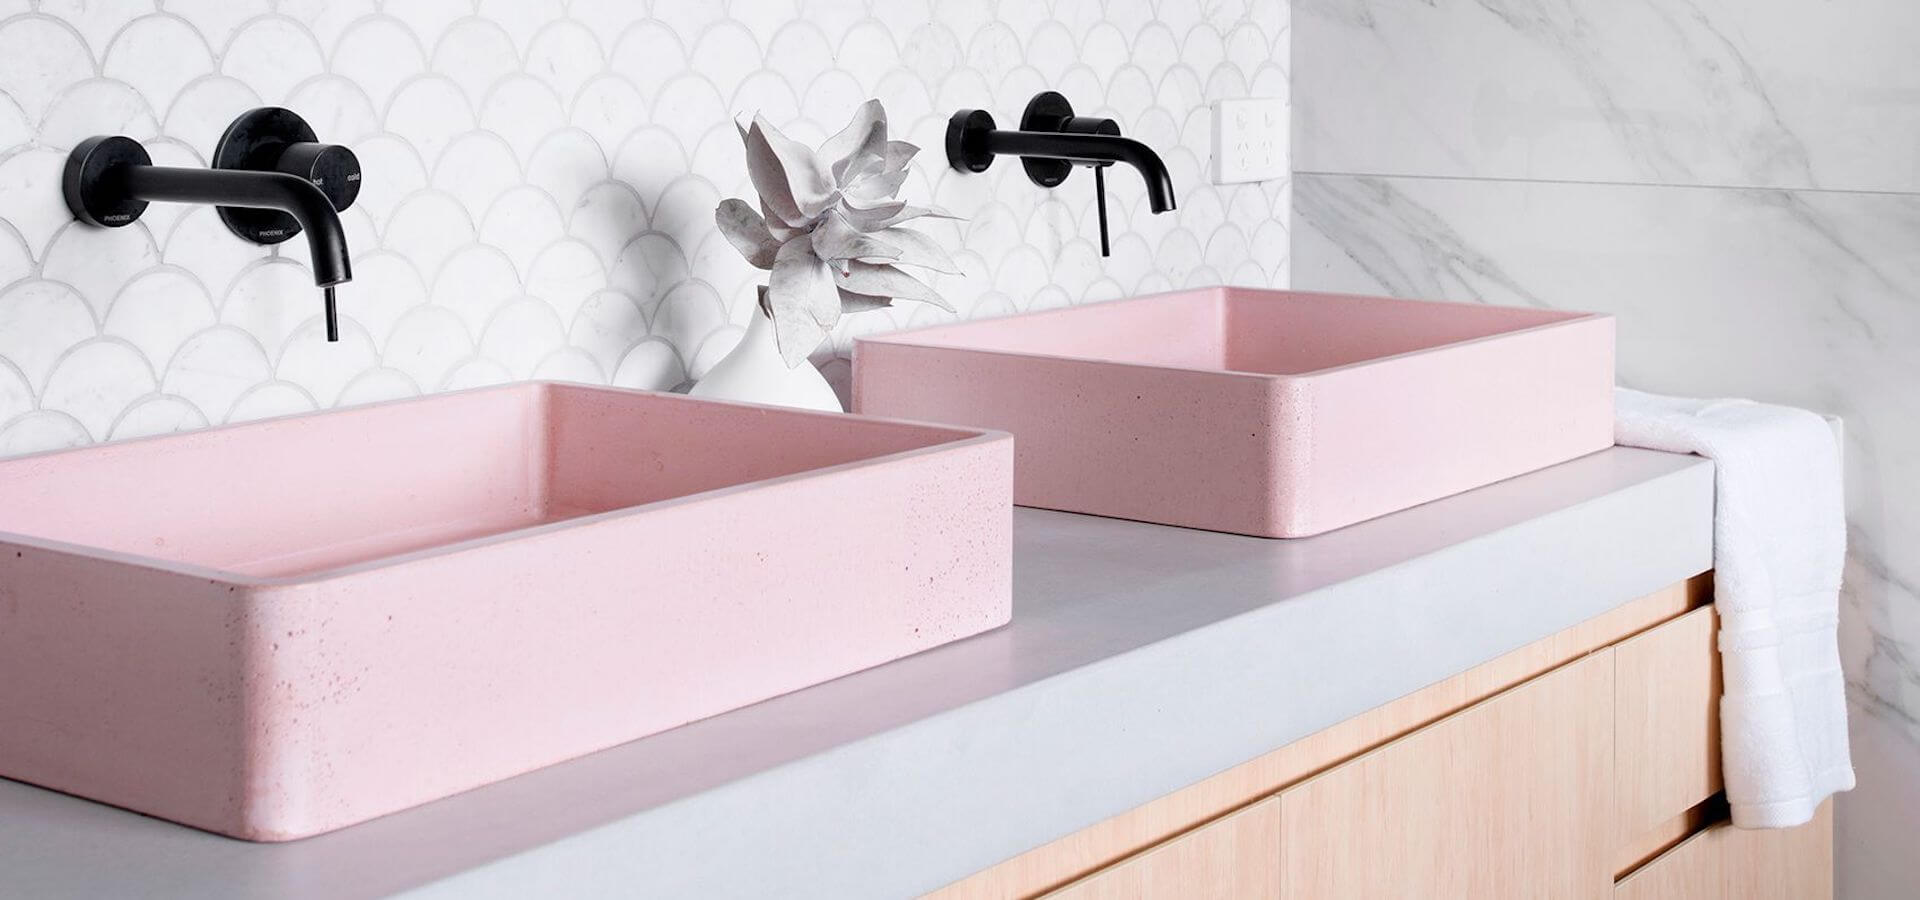 pink sinks 2019 bathroom trends